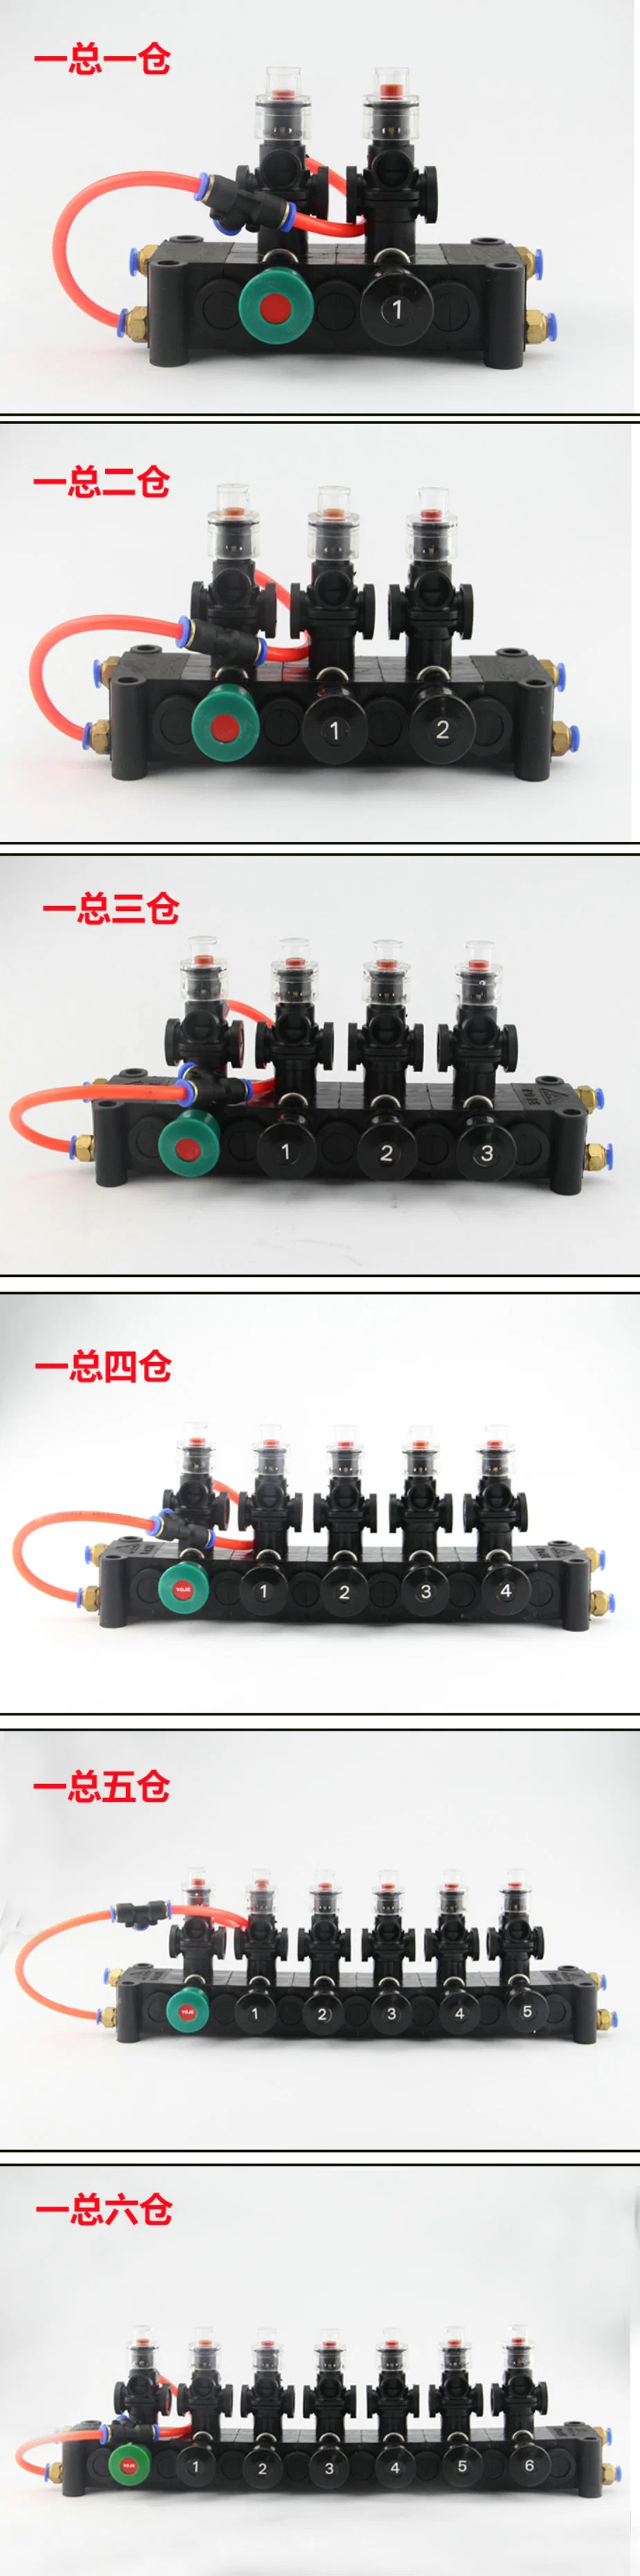 Fuel Tanker Pneumatic Control Block Plastic Switch 7 Compartments Block Valves